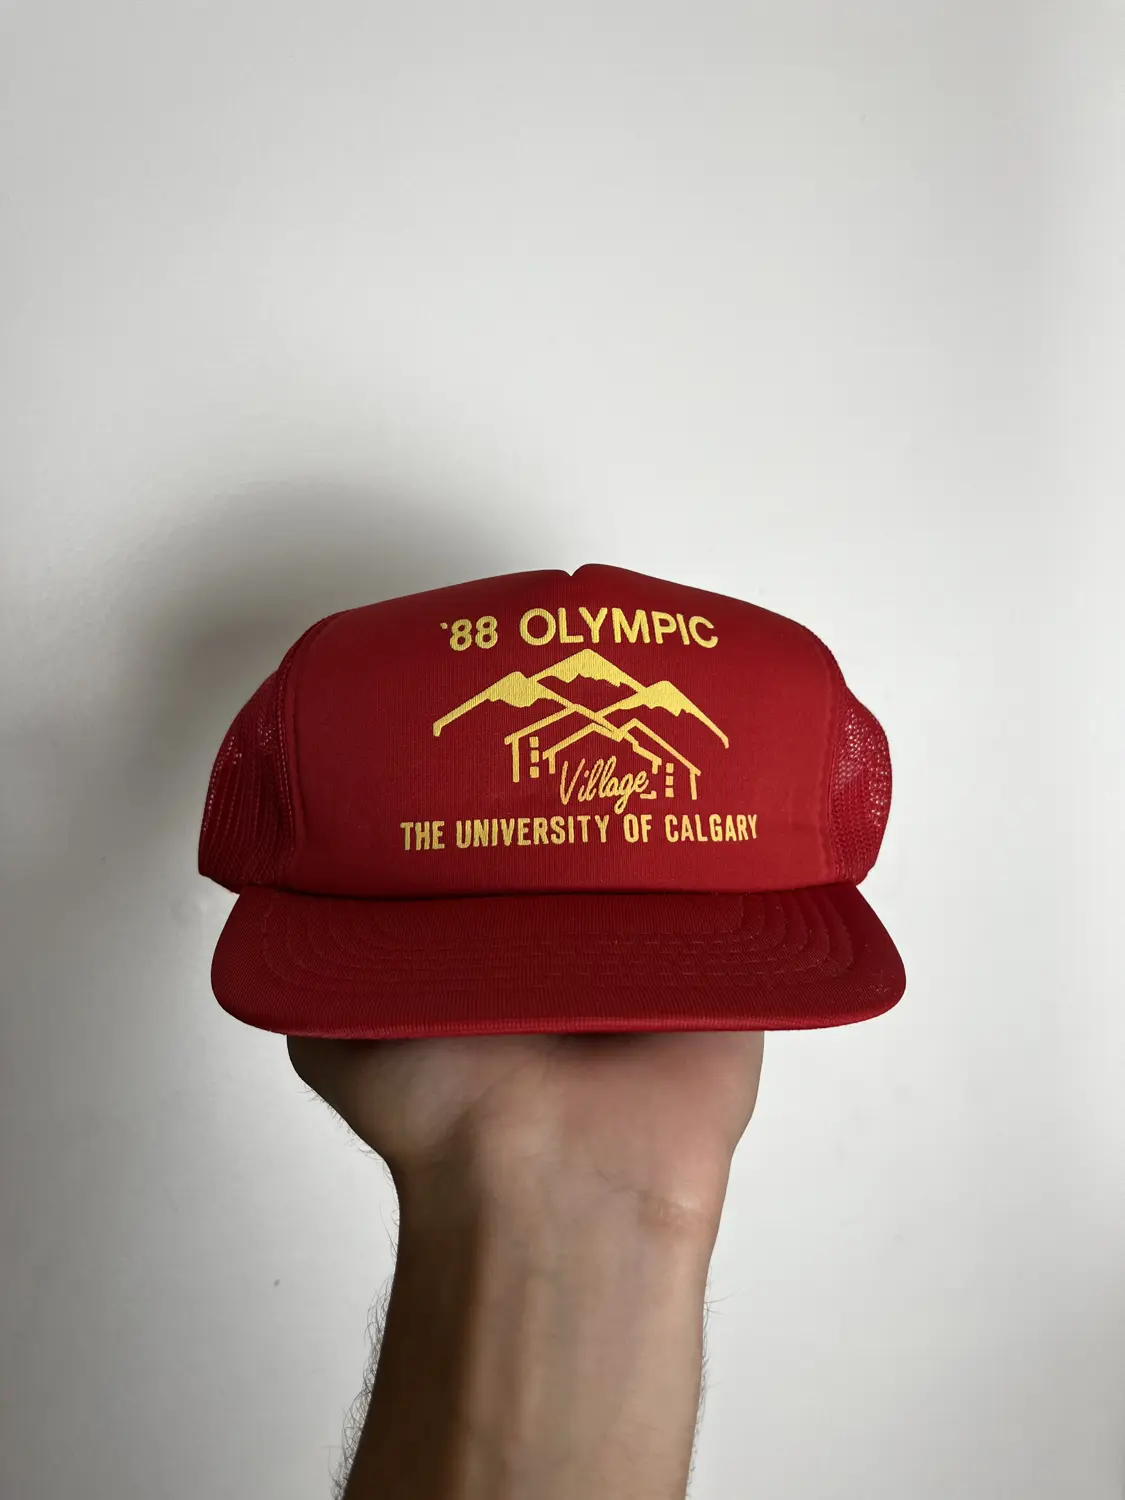 Vintage 88 Olympic University of Calgary